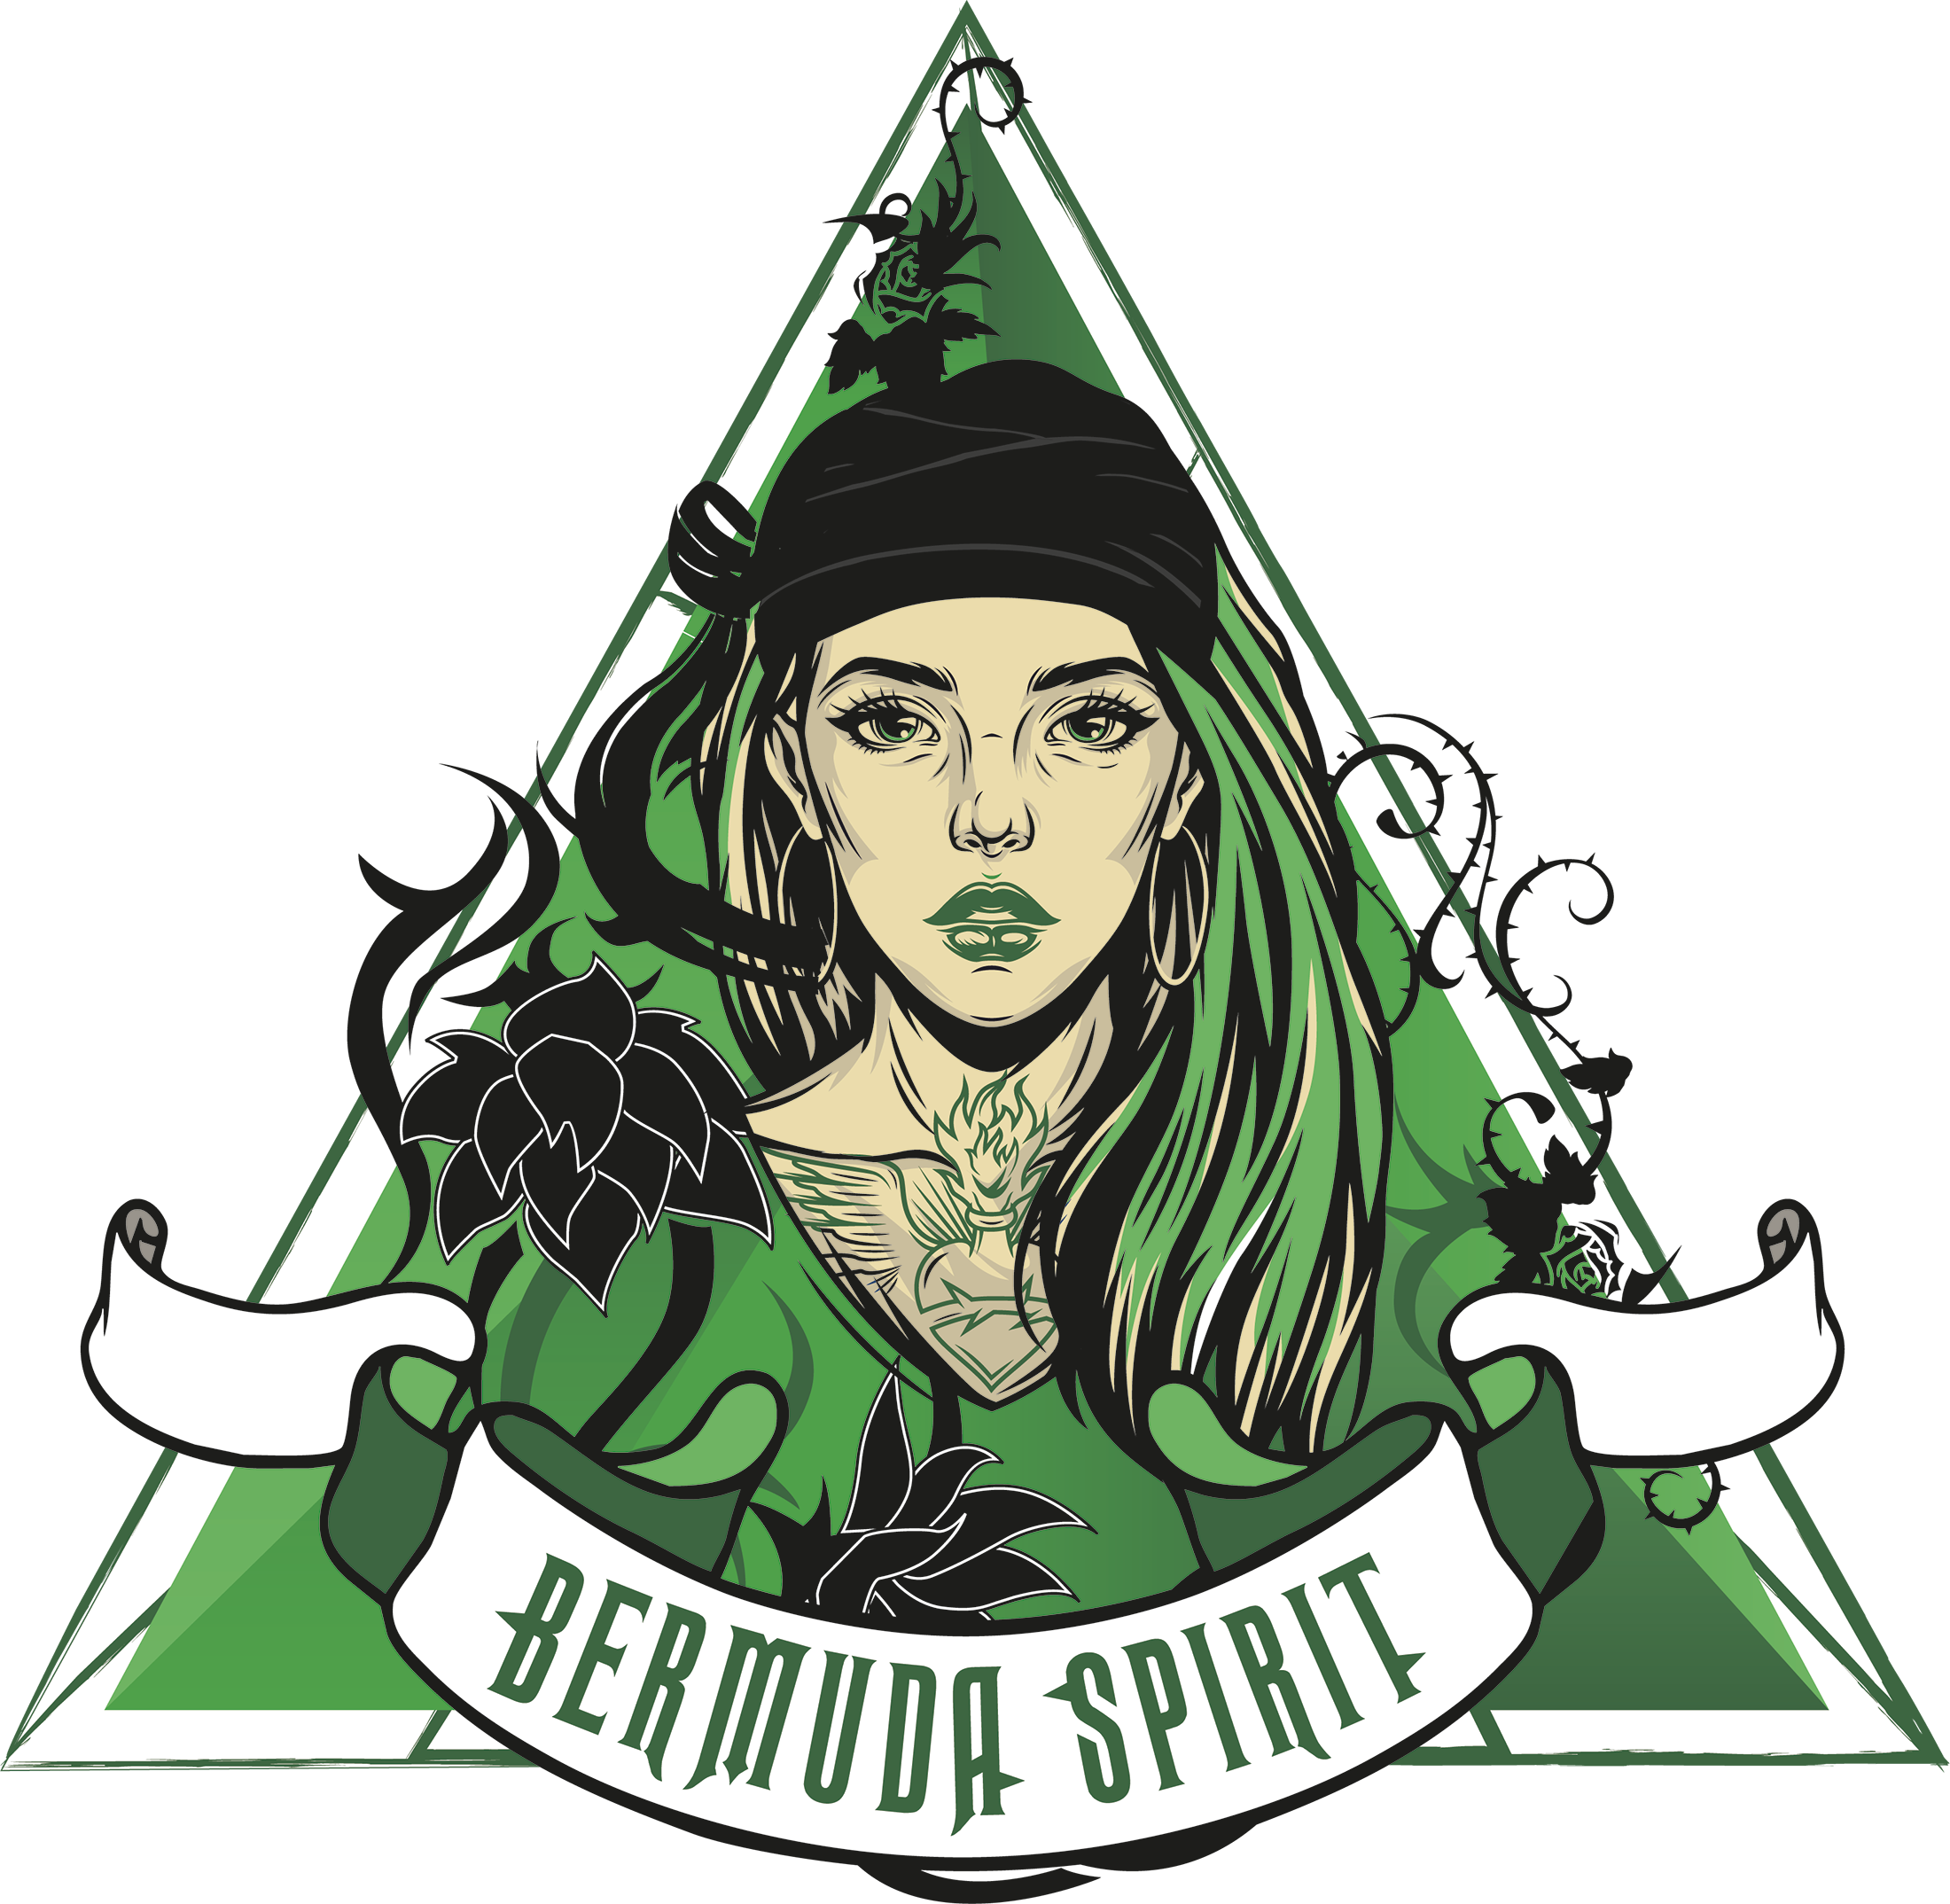 Bermuda Spirit